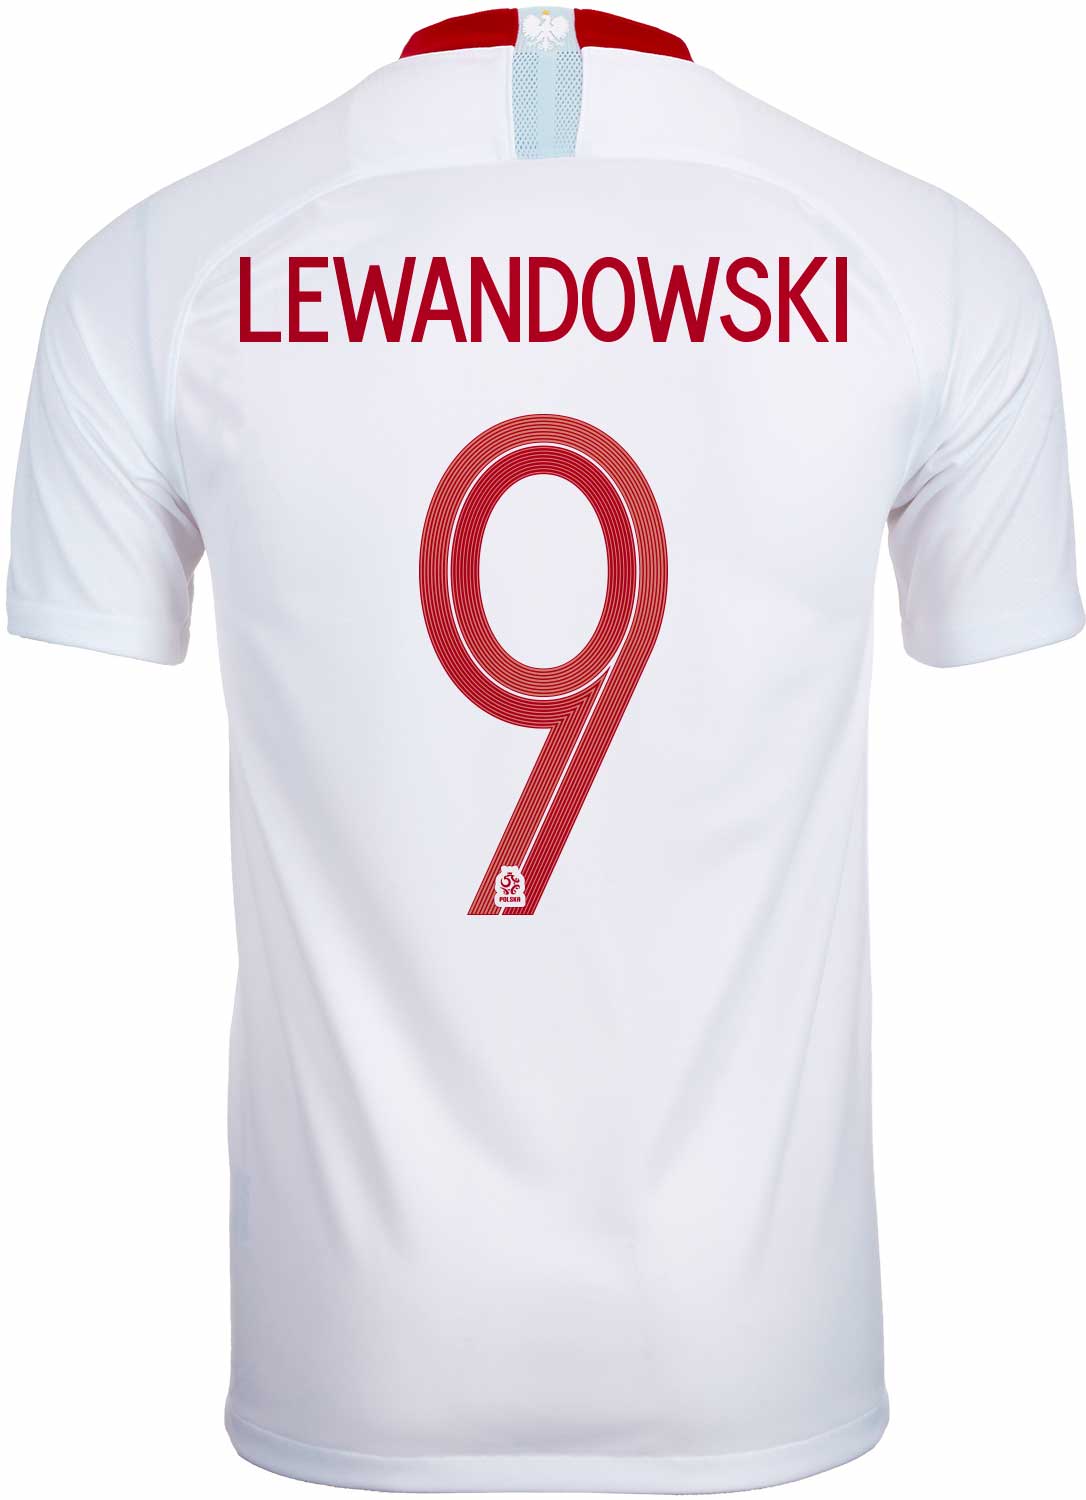 2018/19 Nike Lewandowski Poland Home Jersey -